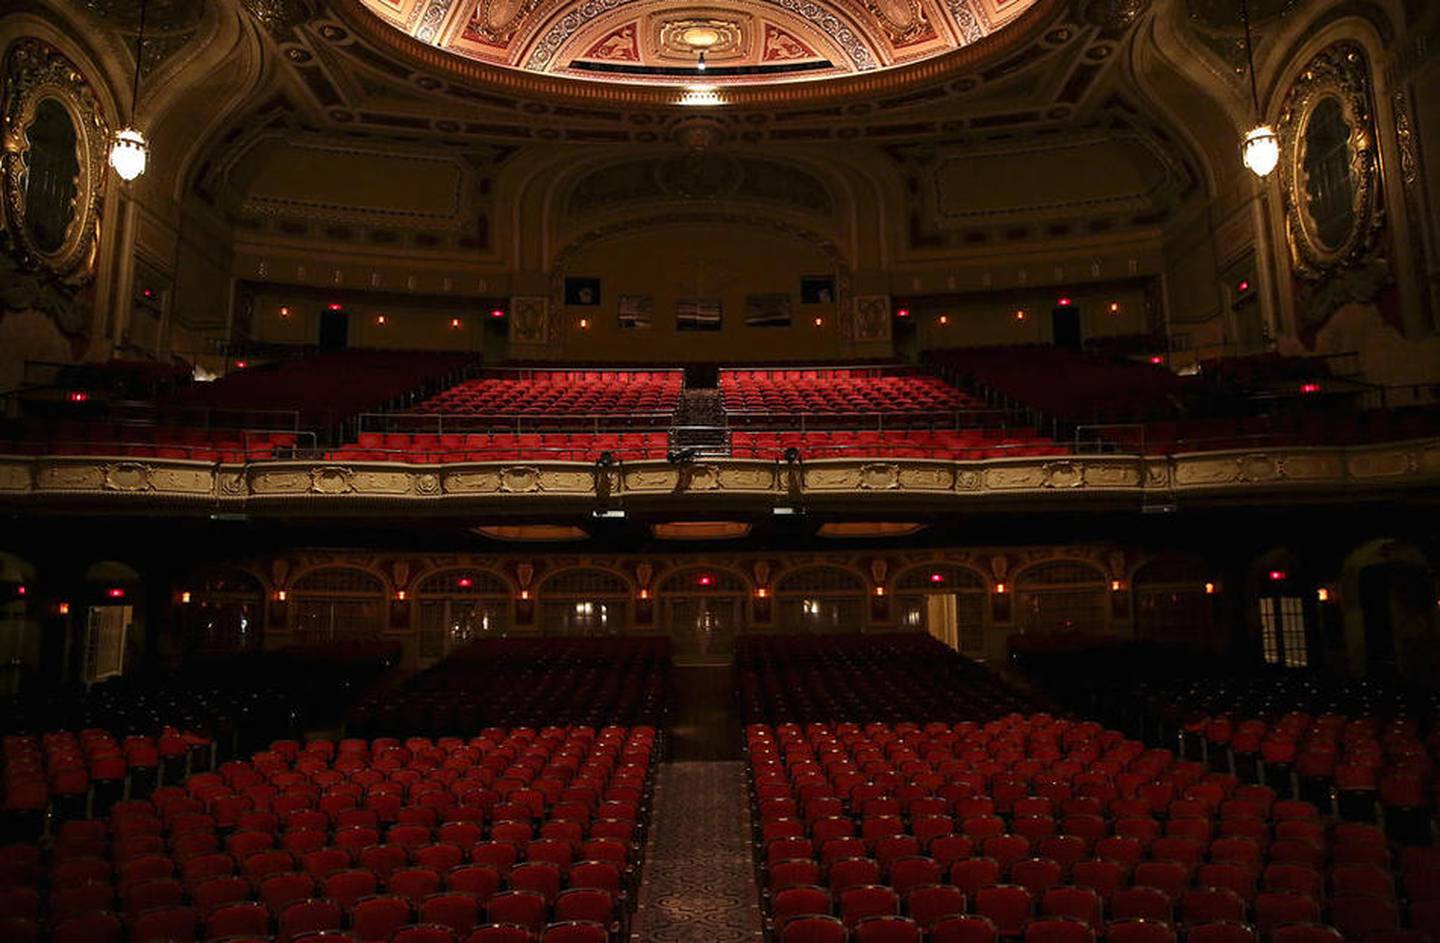 The Rialto Square Theatre's main auditorium sits empty Monday in downtown Joliet.